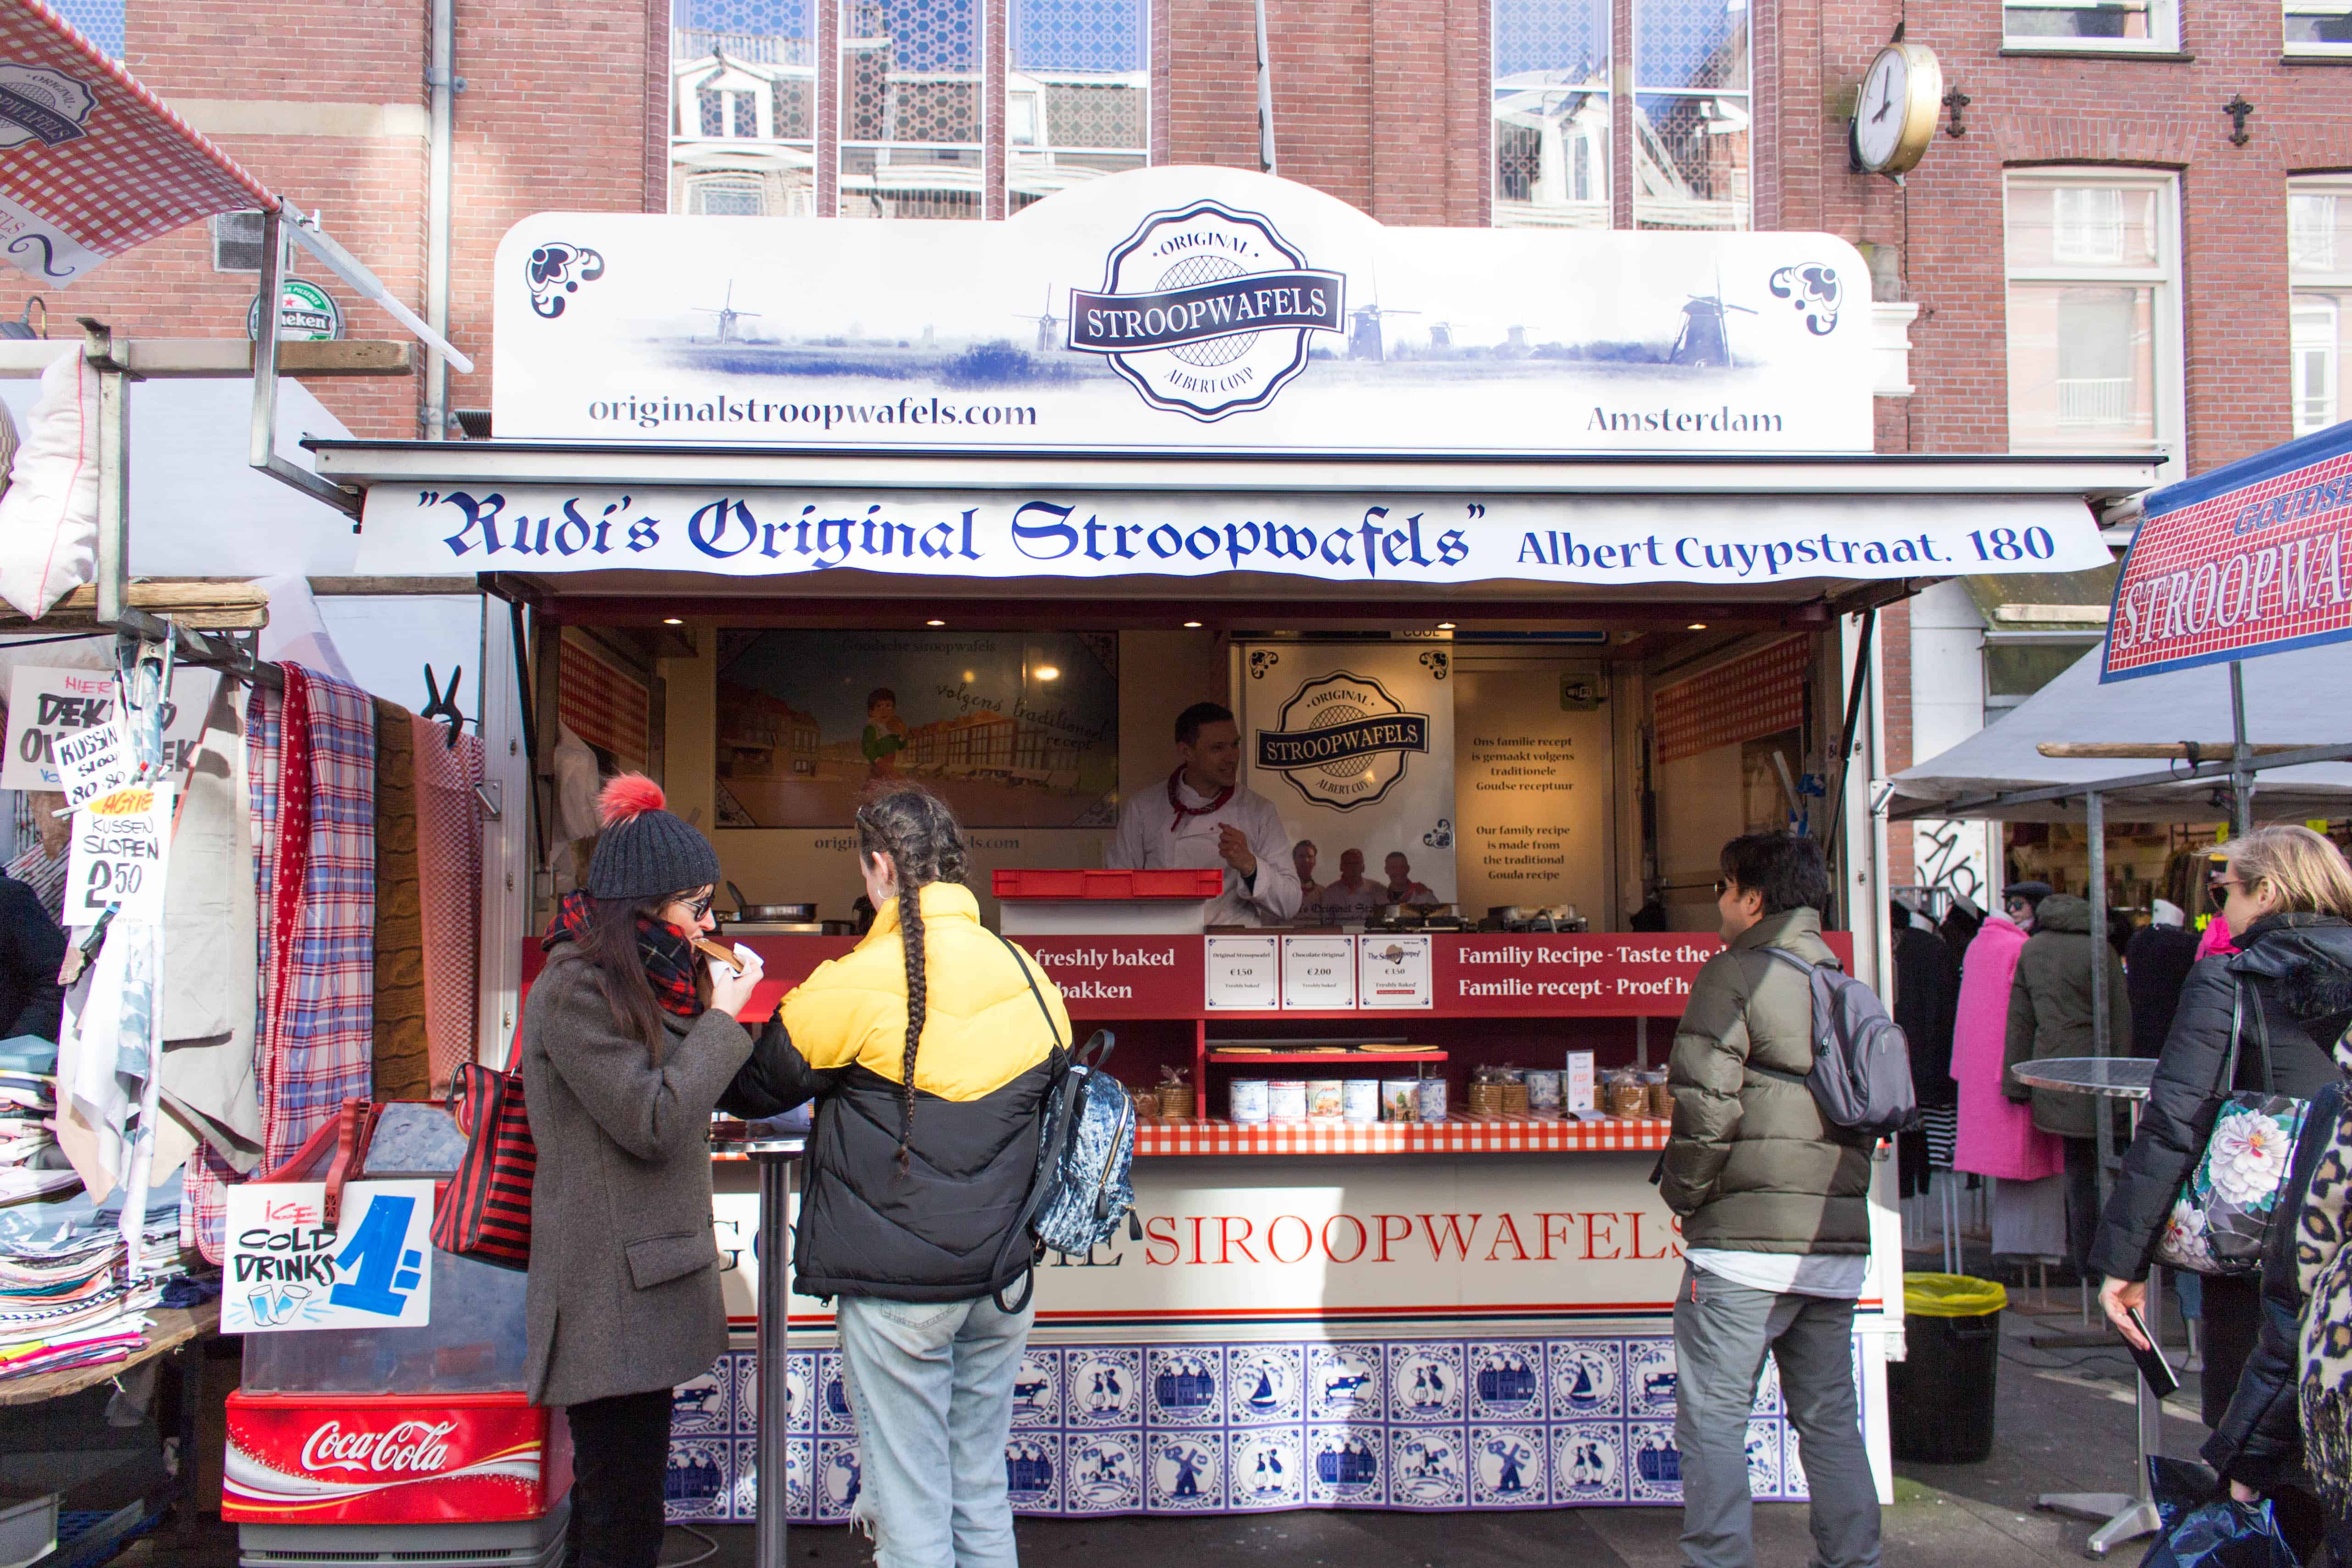 stroopwafels in amsterdam in albert cuyp market